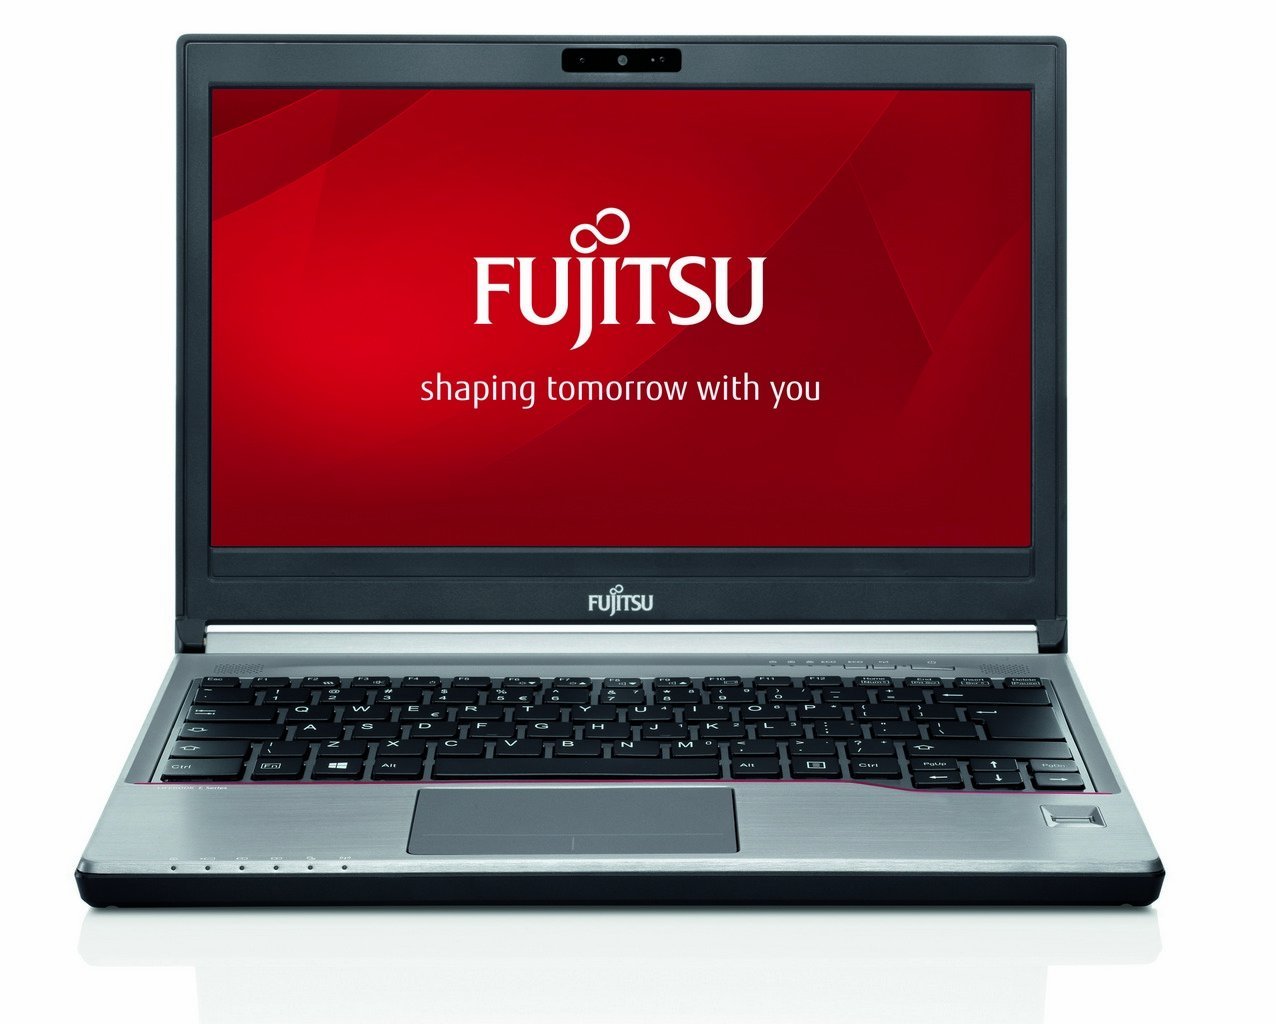 Fujitsu Backgrounds on Wallpapers Vista